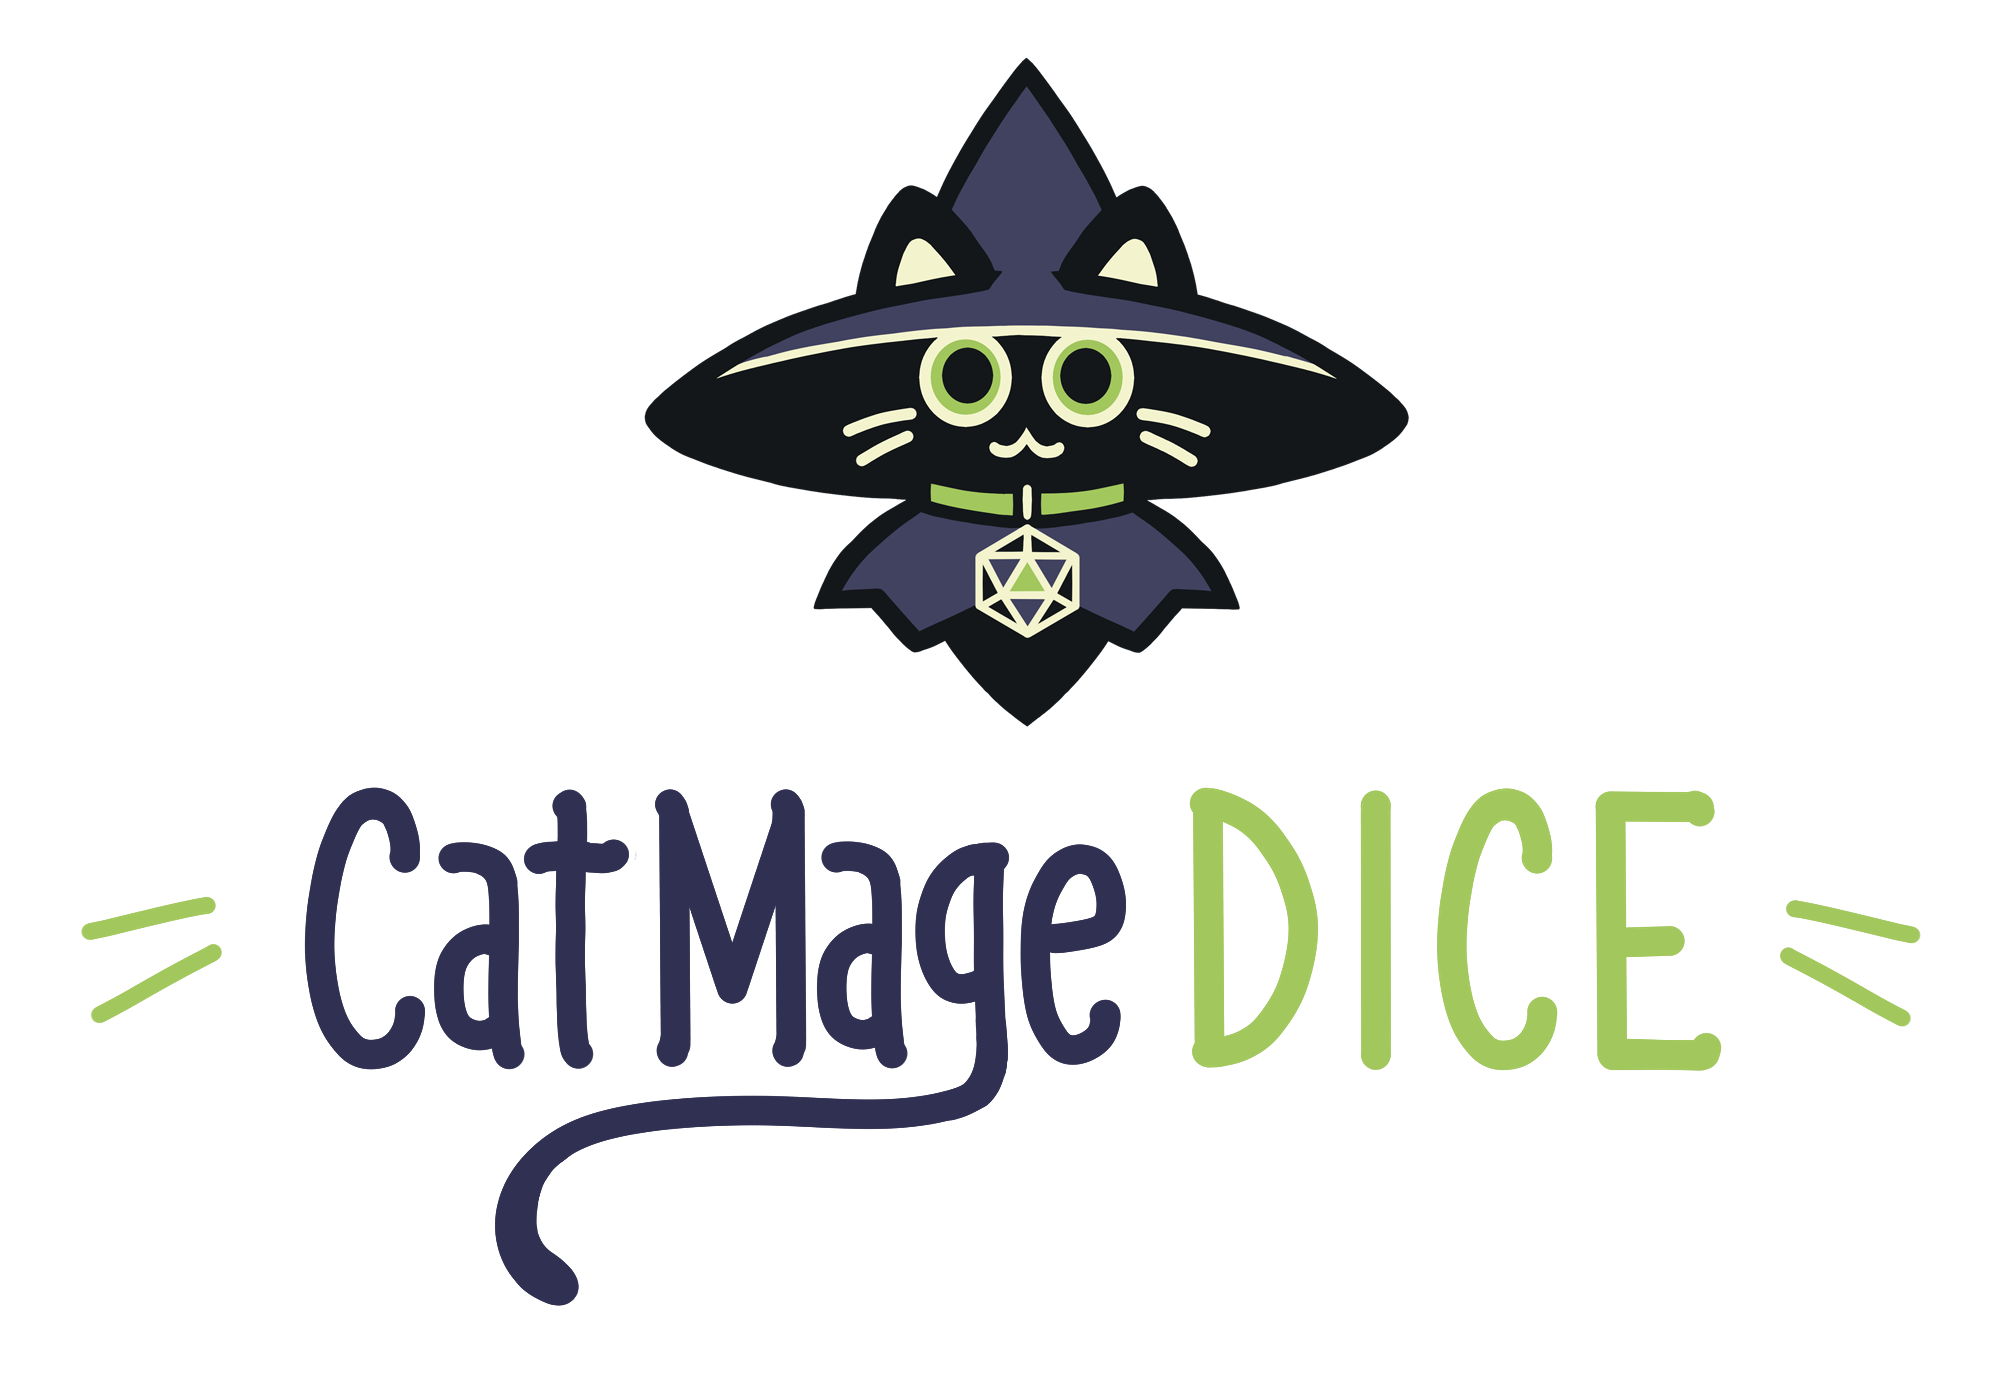 CatMage Dice